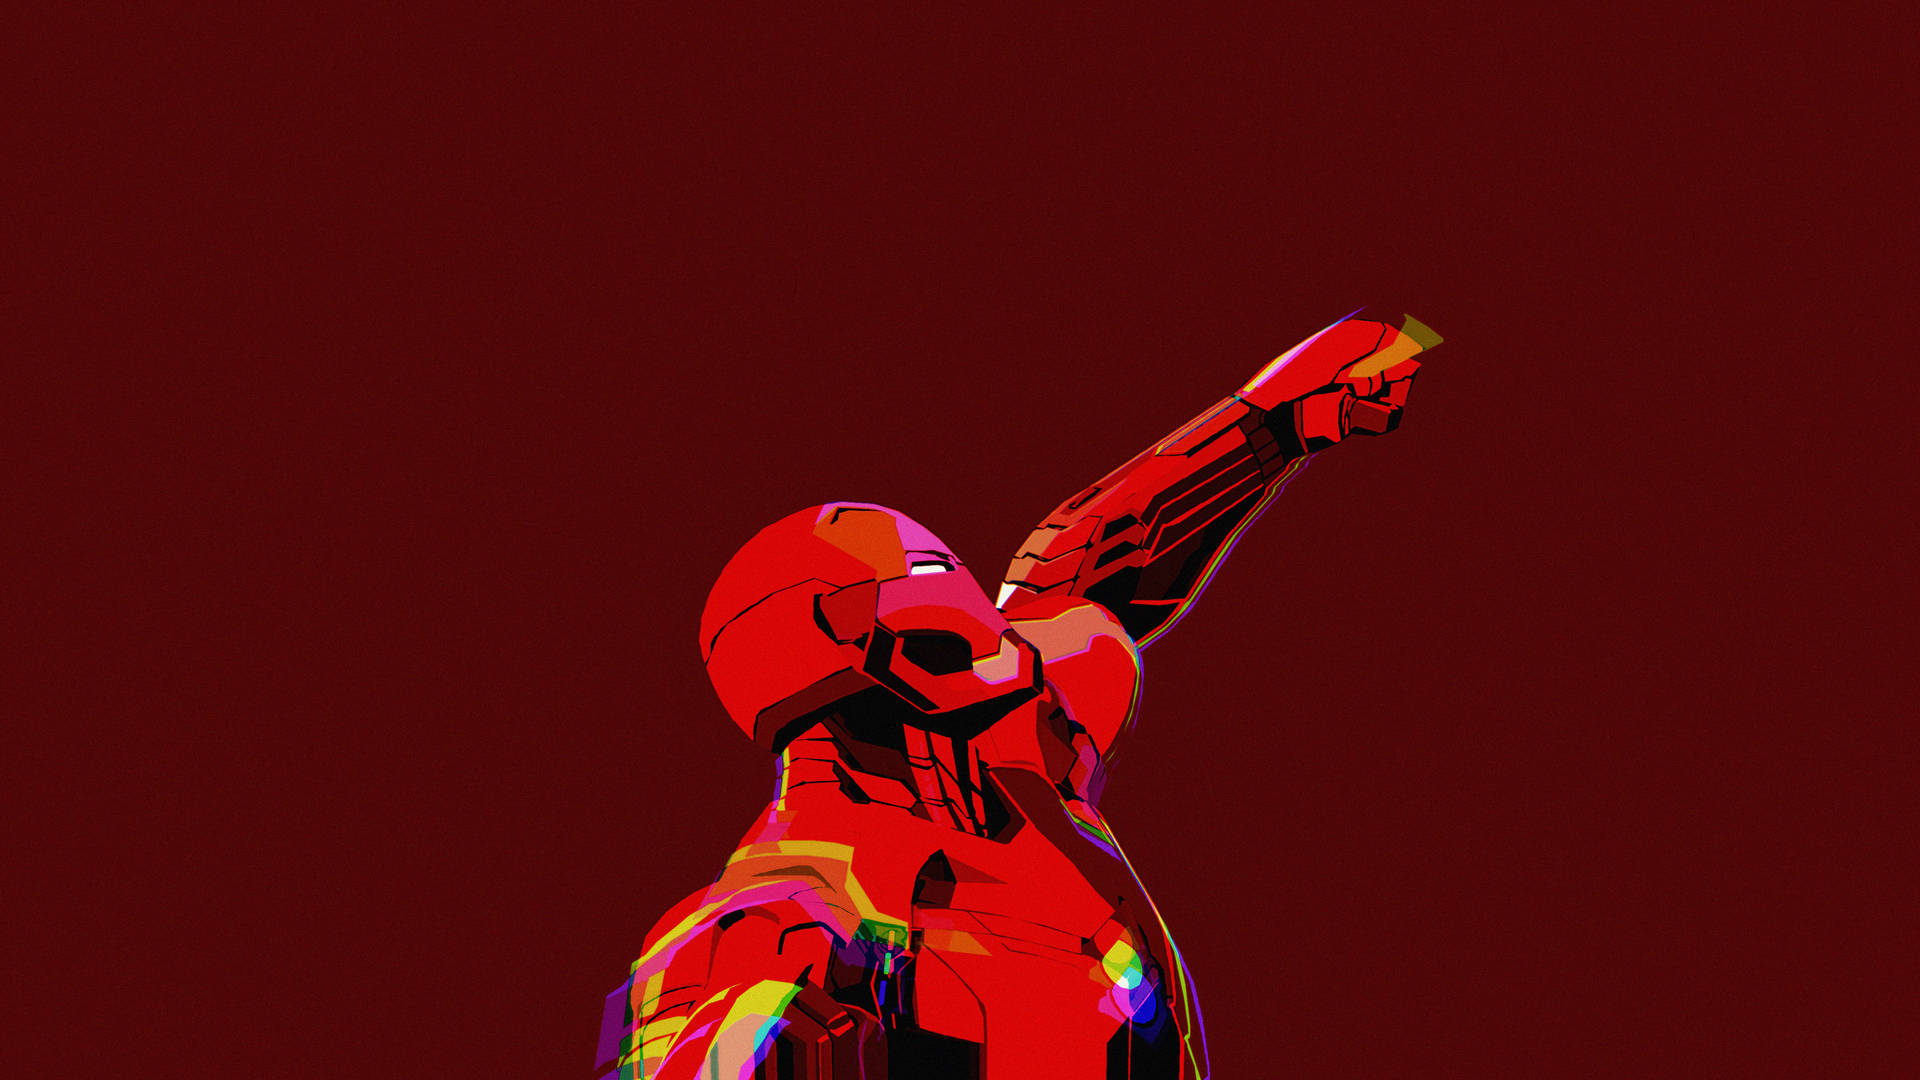 Simple Clean Iron Man Graphic Art Wallpaper